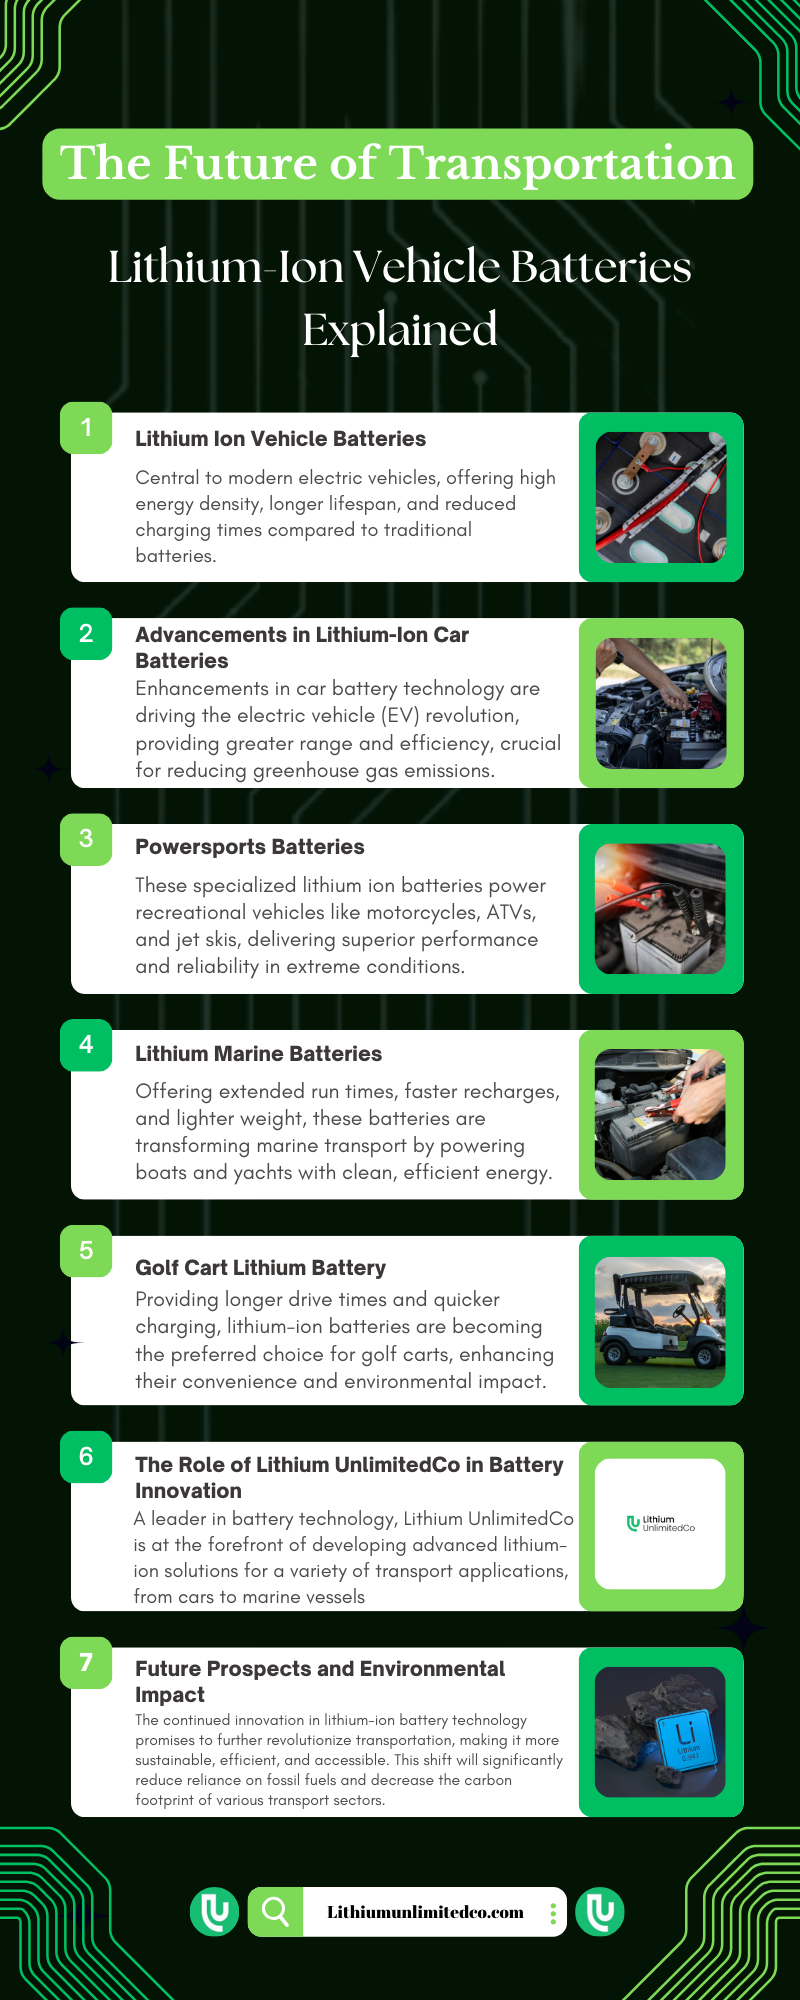 The Future of Transportation Lithium Ion Vehicle Batteries Explained - Gifyu